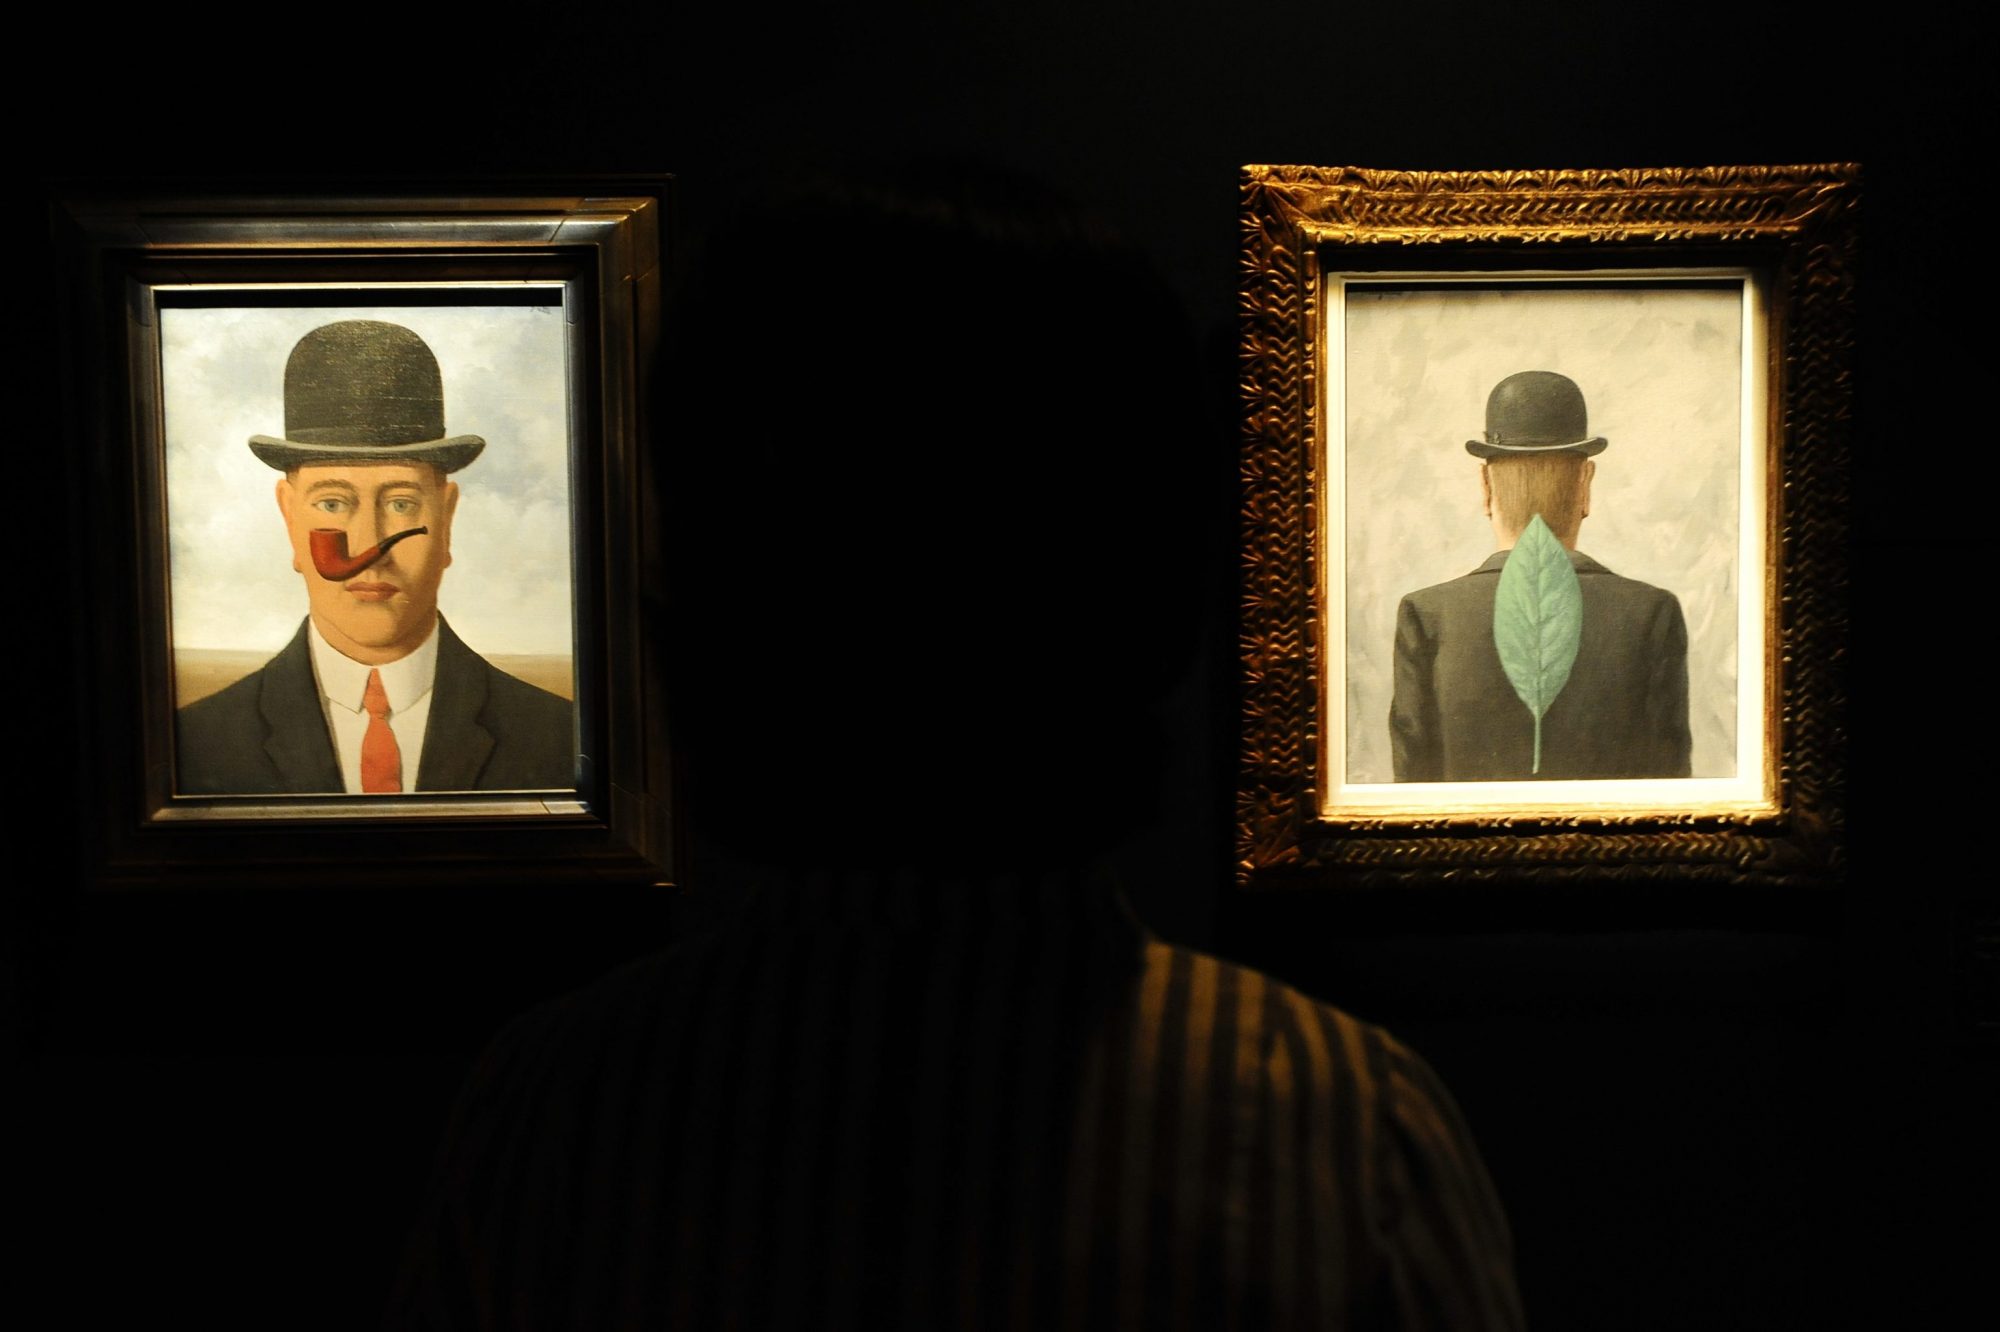 Bilder im Magritte Museum Brüssel 2009